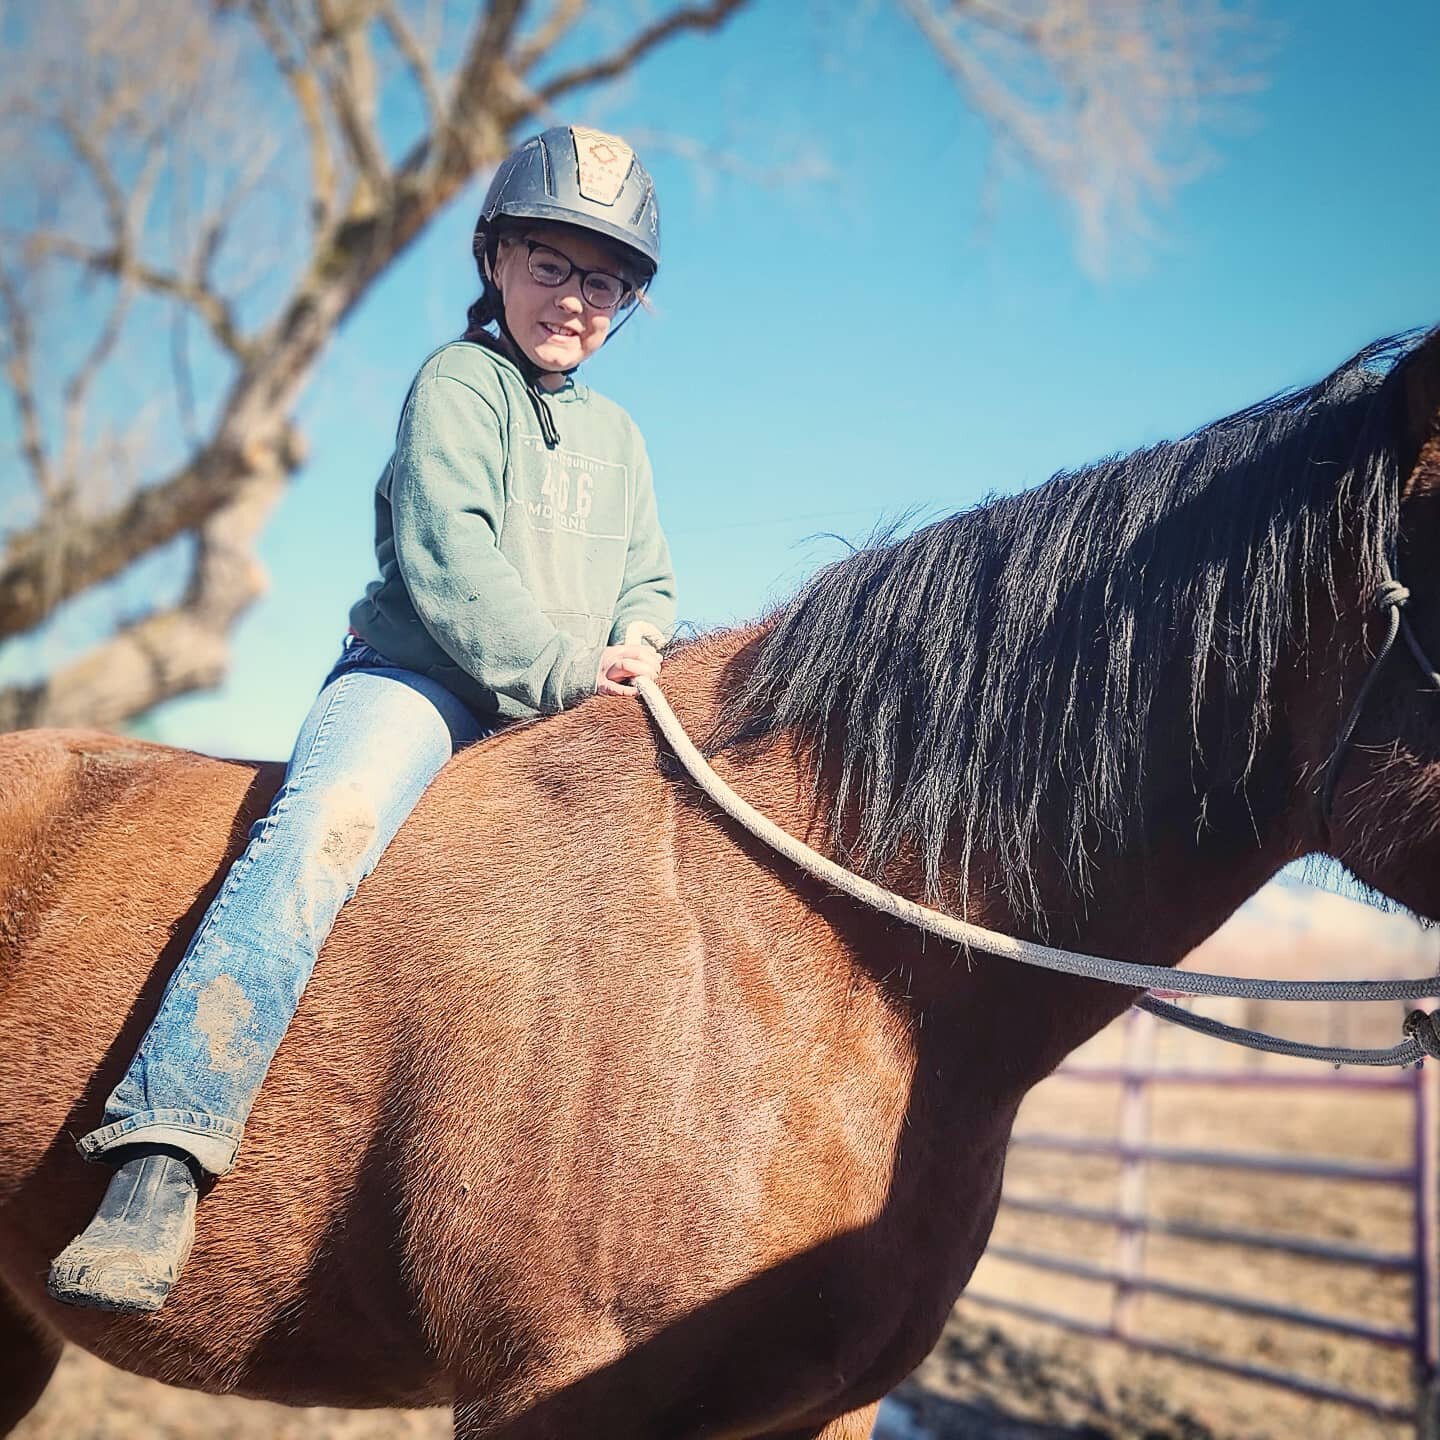 Sundays are for bareback and halters, muddy jeans and happy kids. 
#ceriseranch #ranchlife #raisinghandygirls #sundaysareforhorses